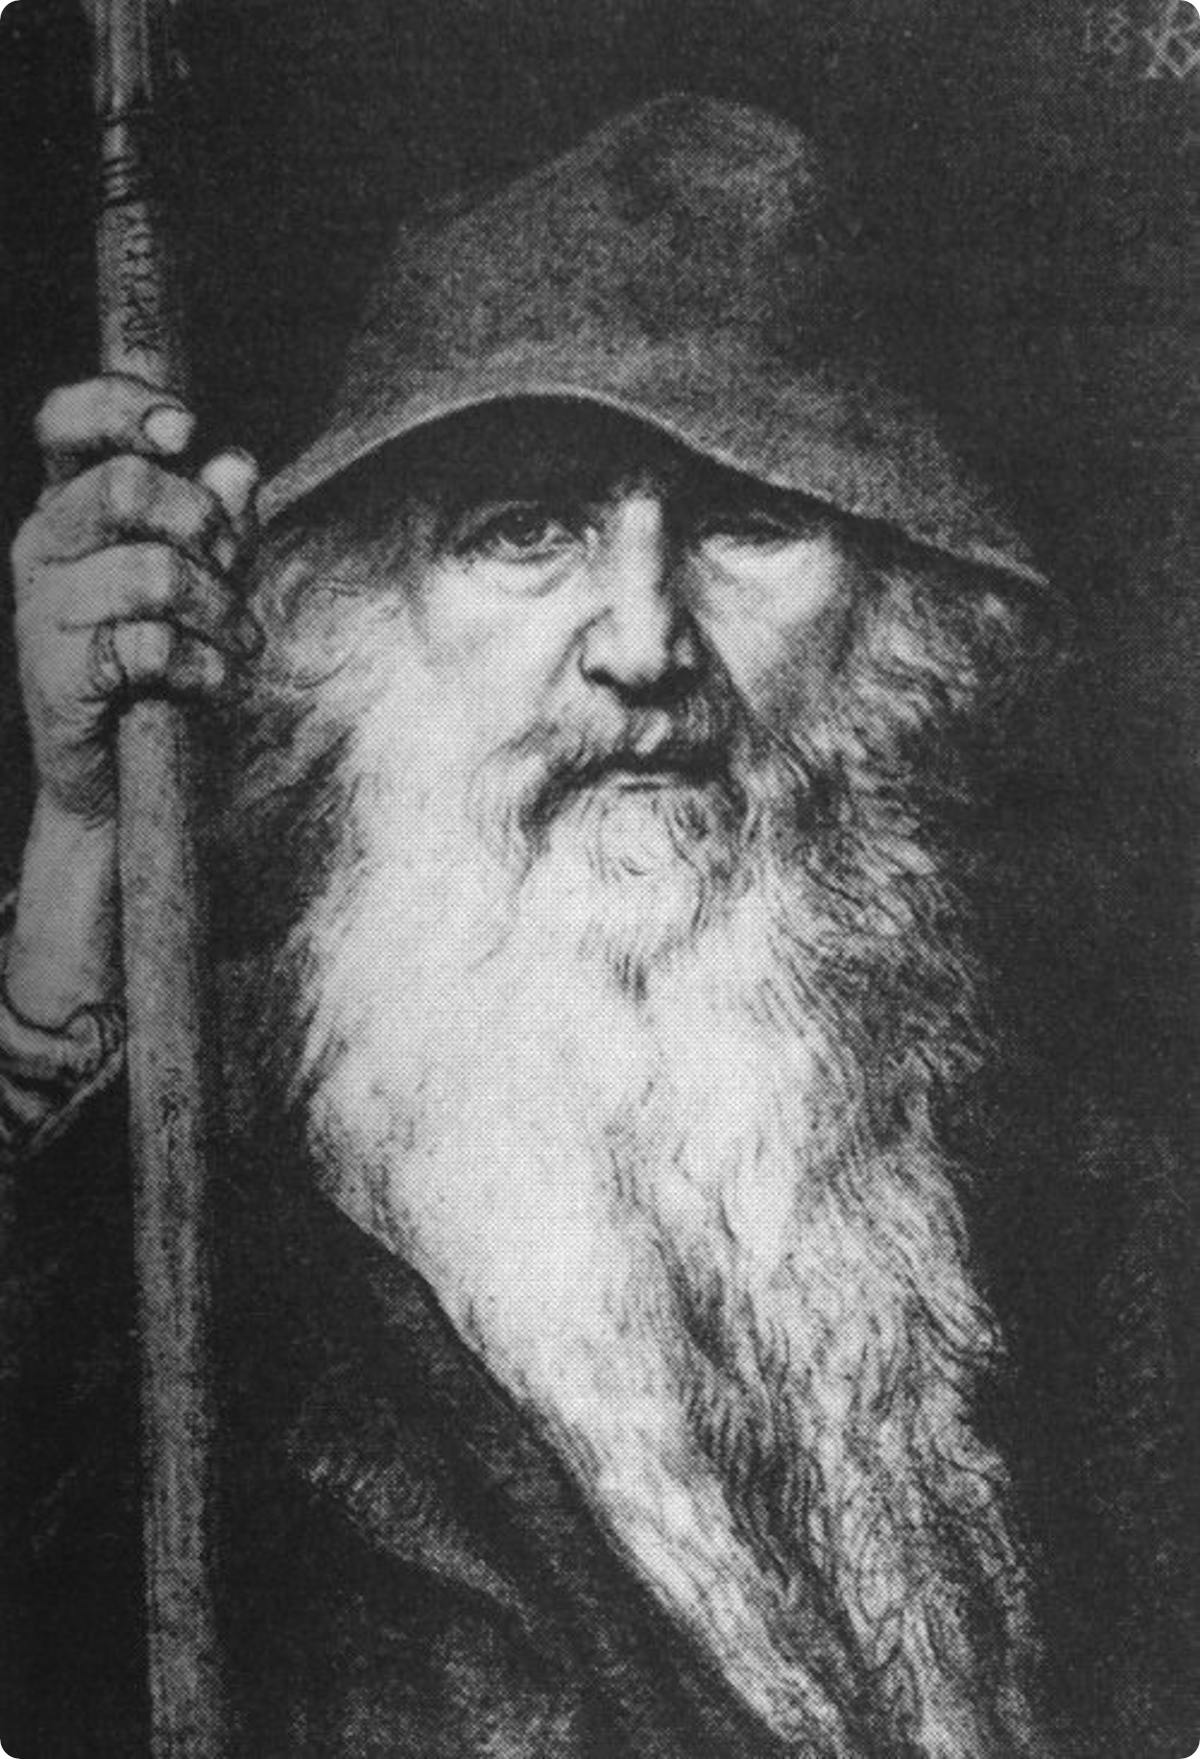 Odin - the origins of Santa Claus